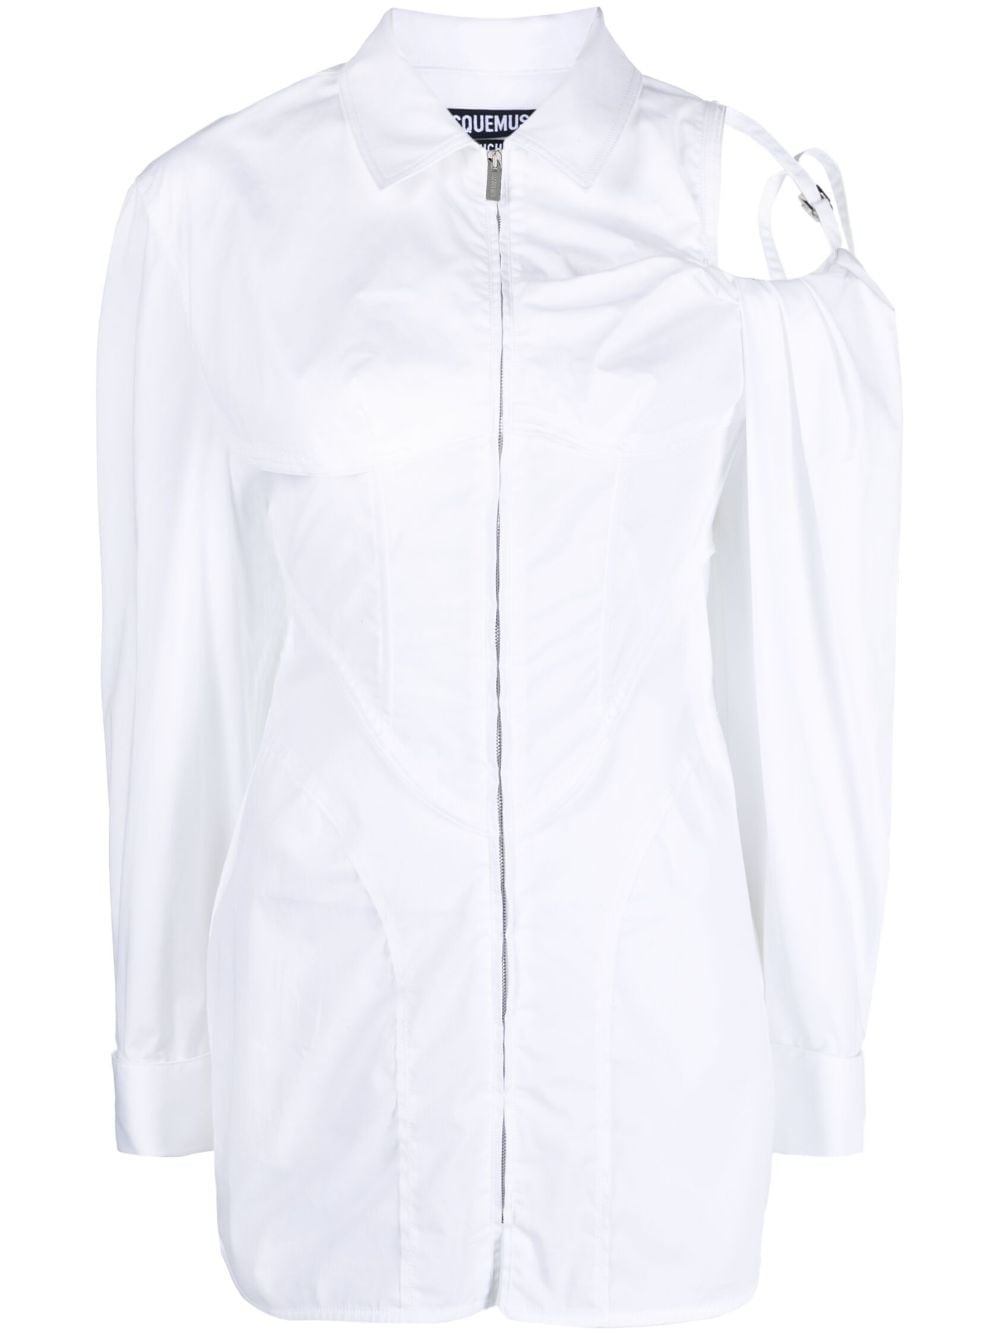 Galliga asymmetric shirt dress - 1